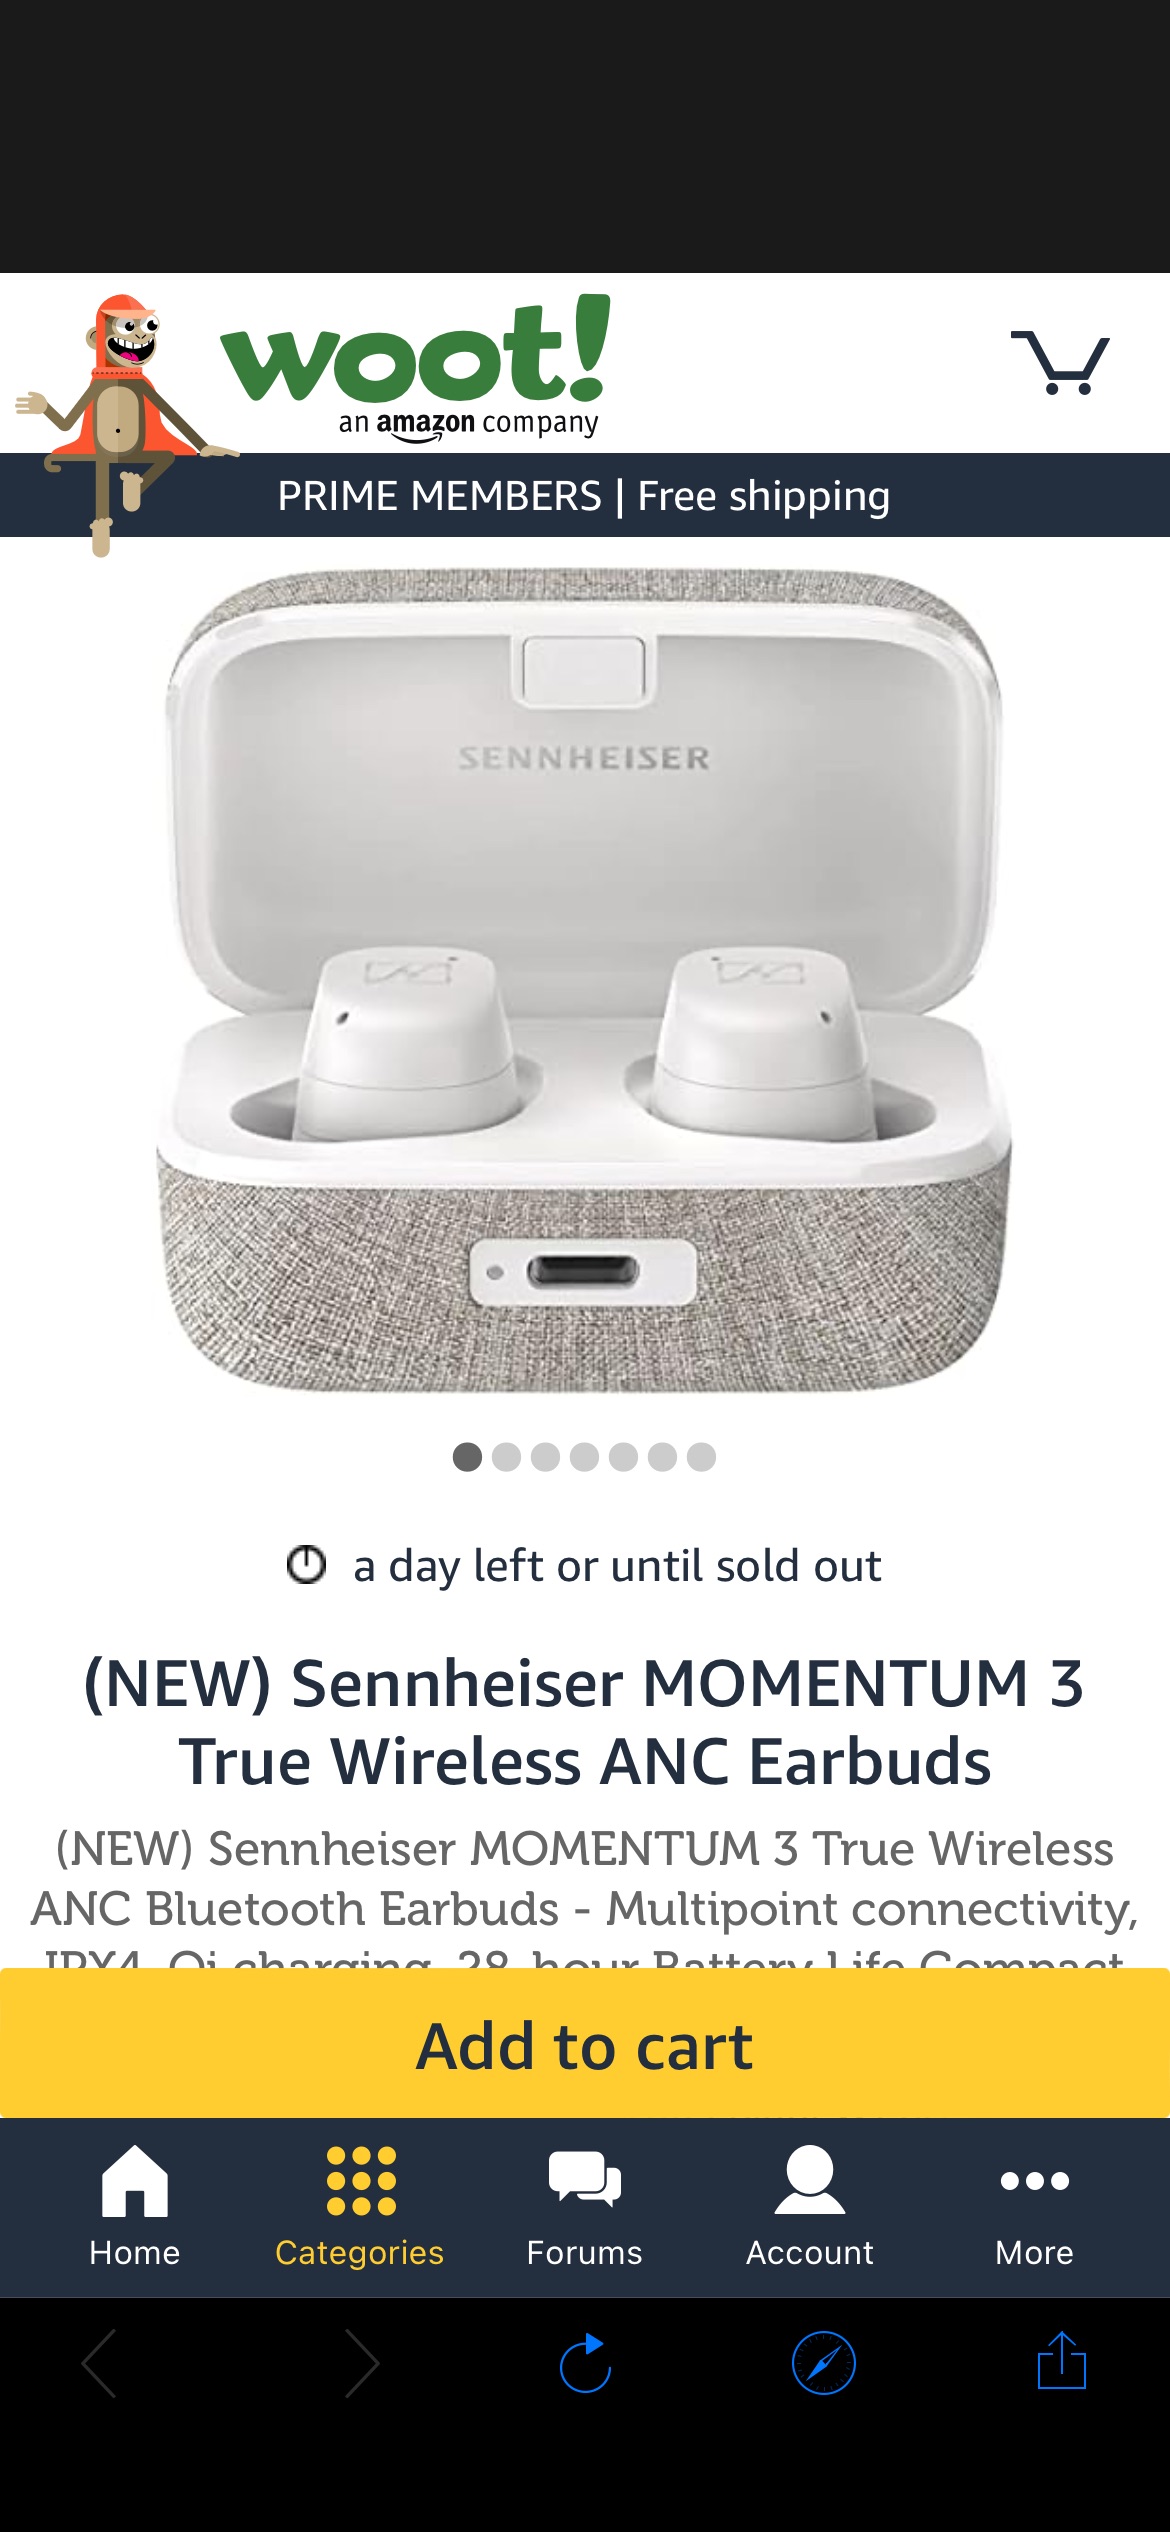 (NEW) Sennheiser MOMENTUM 3 True Wireless ANC Earbuds